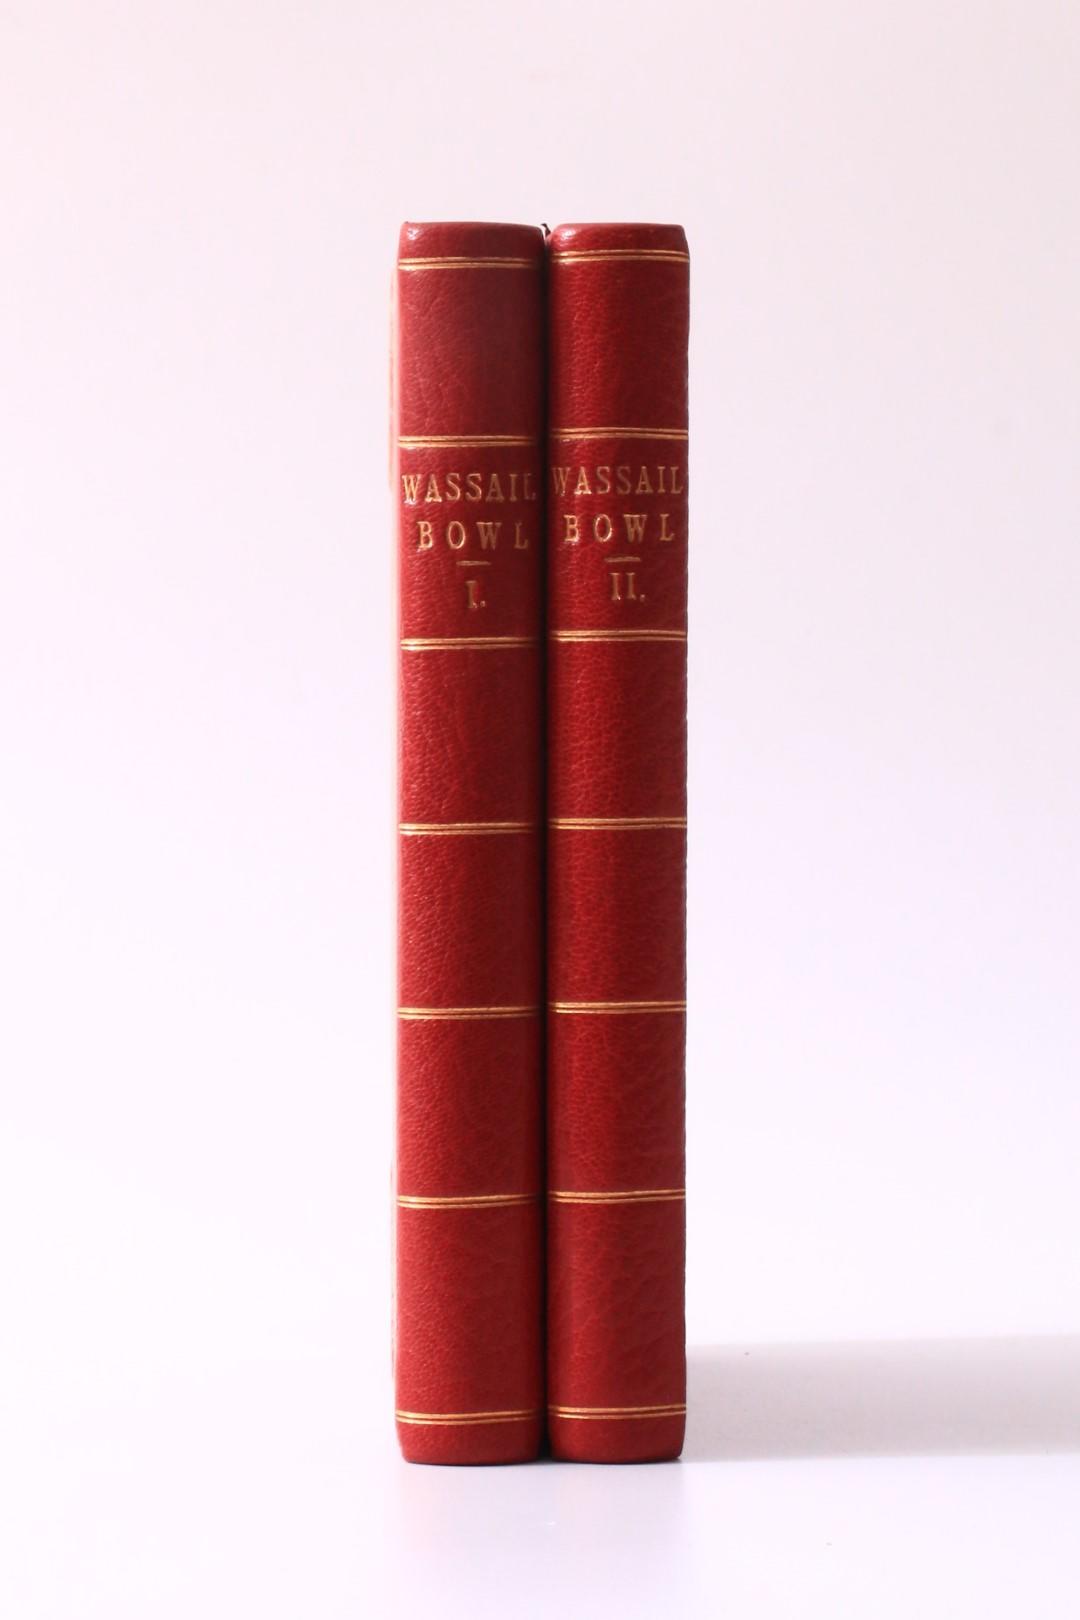 Albert Smith - The Wassail-Bowl - Richard Bentley, 1843, First Edition.